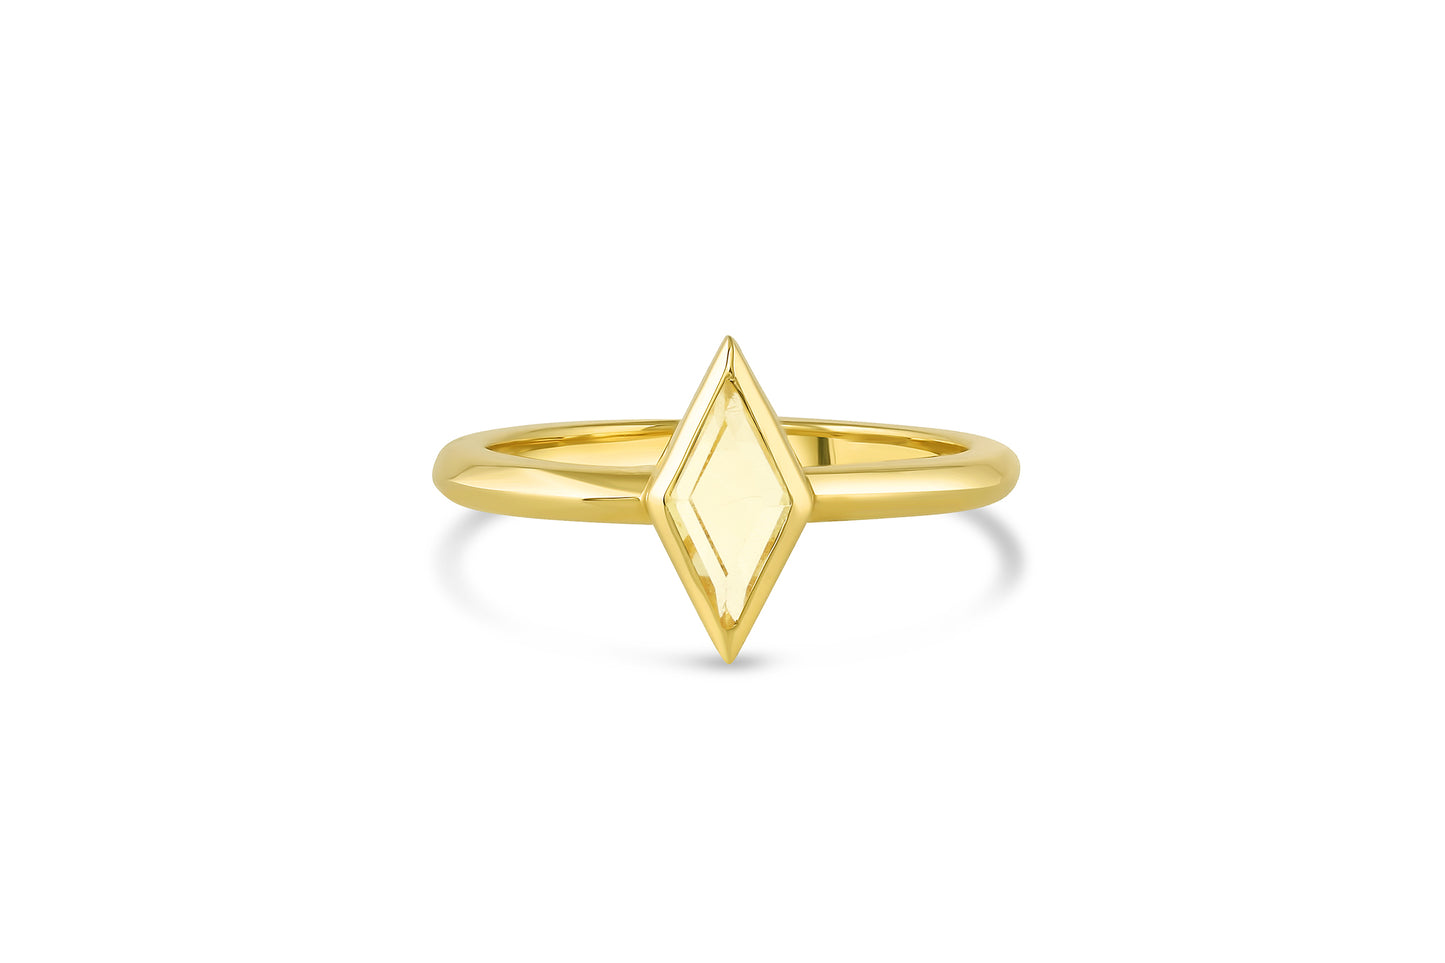 Rhombus shaped yellow sapphire gemstone solitaire ring set in 18k yellow gold.